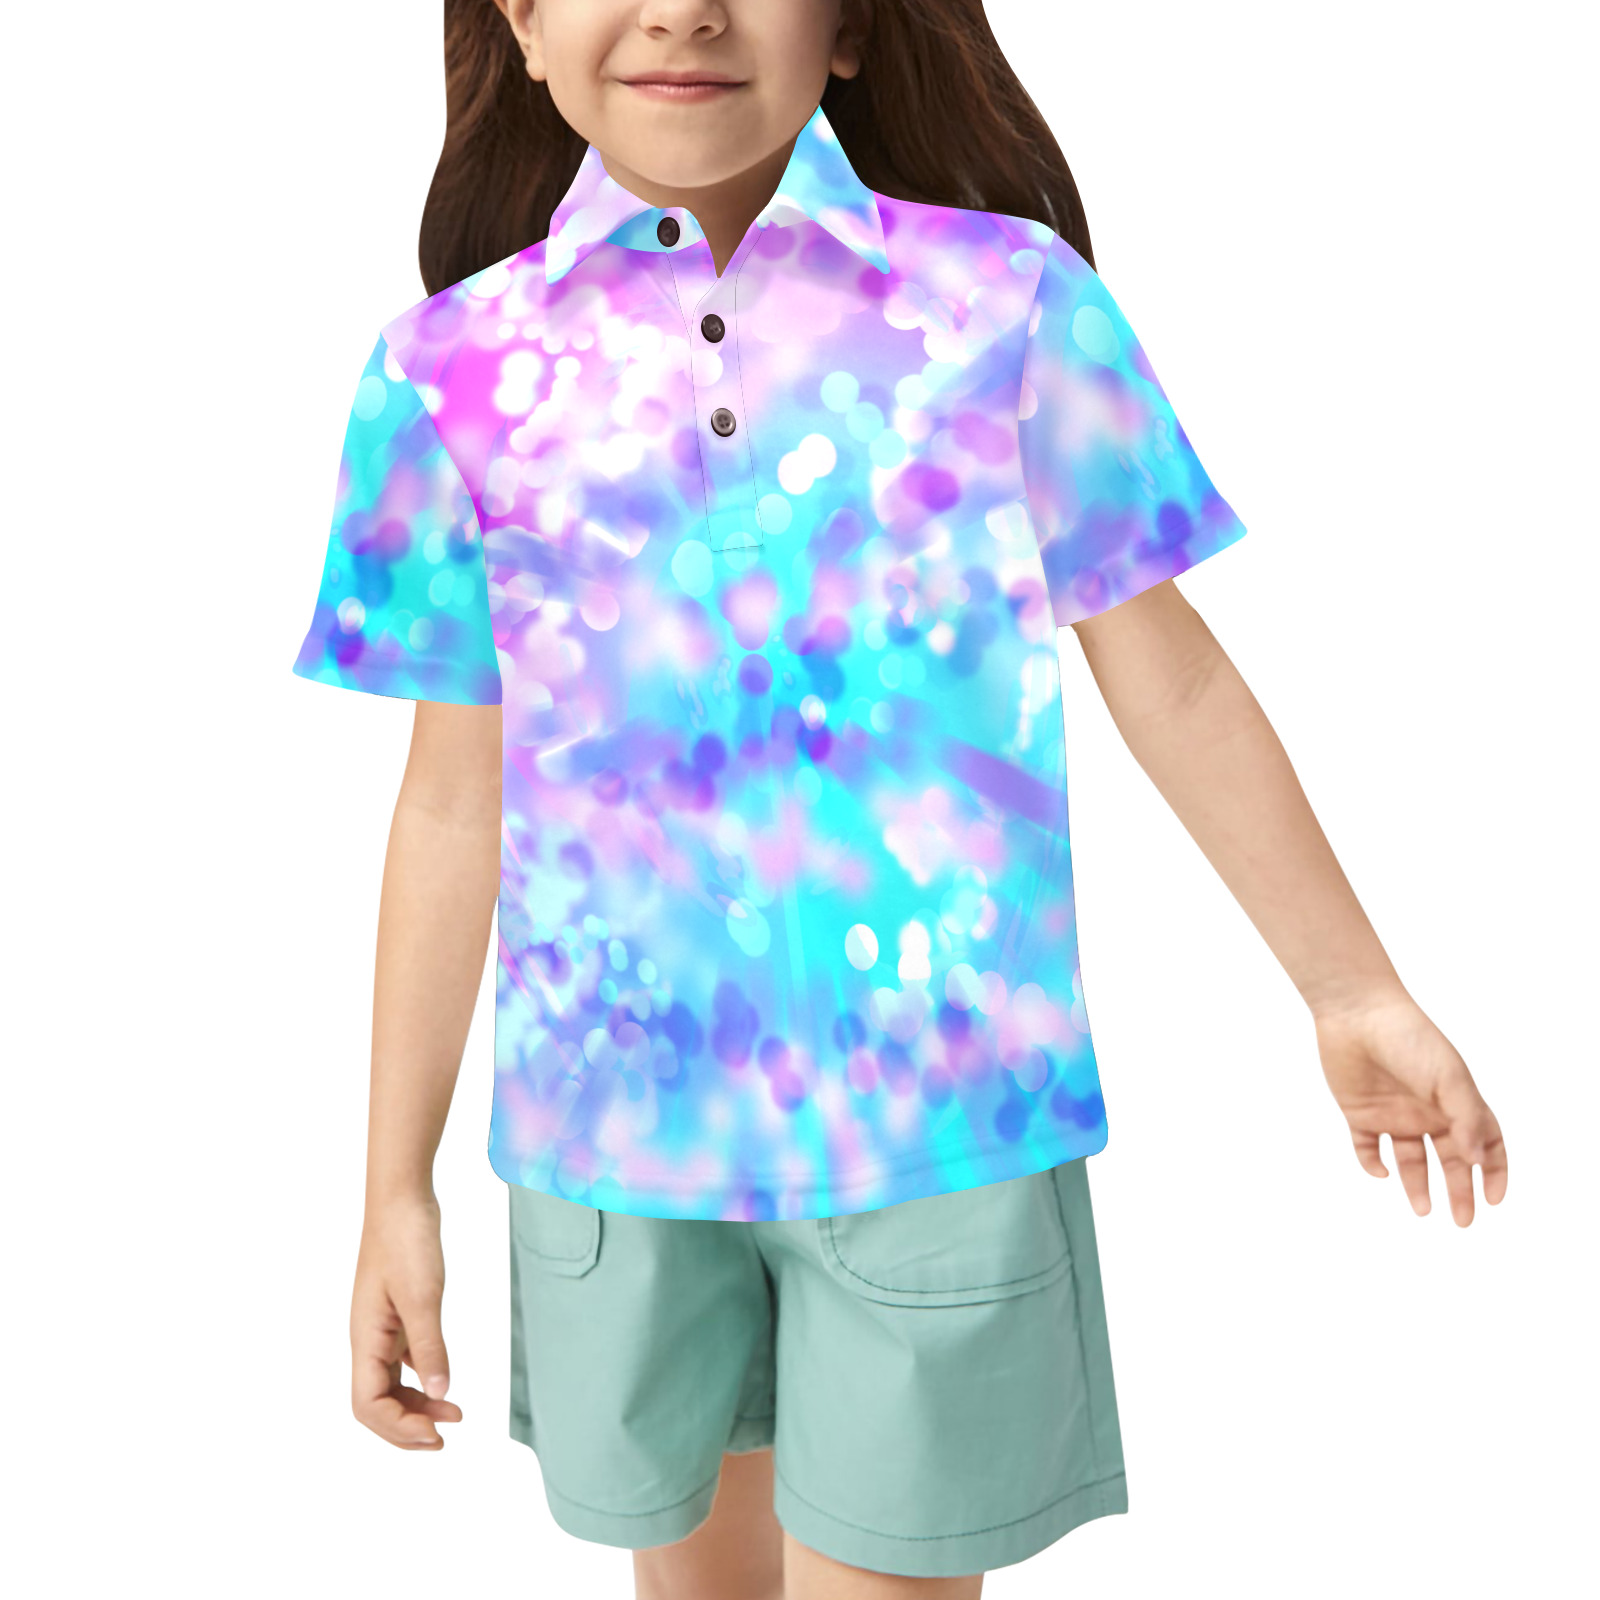 Purple And Blue Bokeh 7518 Little Girls' All Over Print Polo Shirt (Model T55)